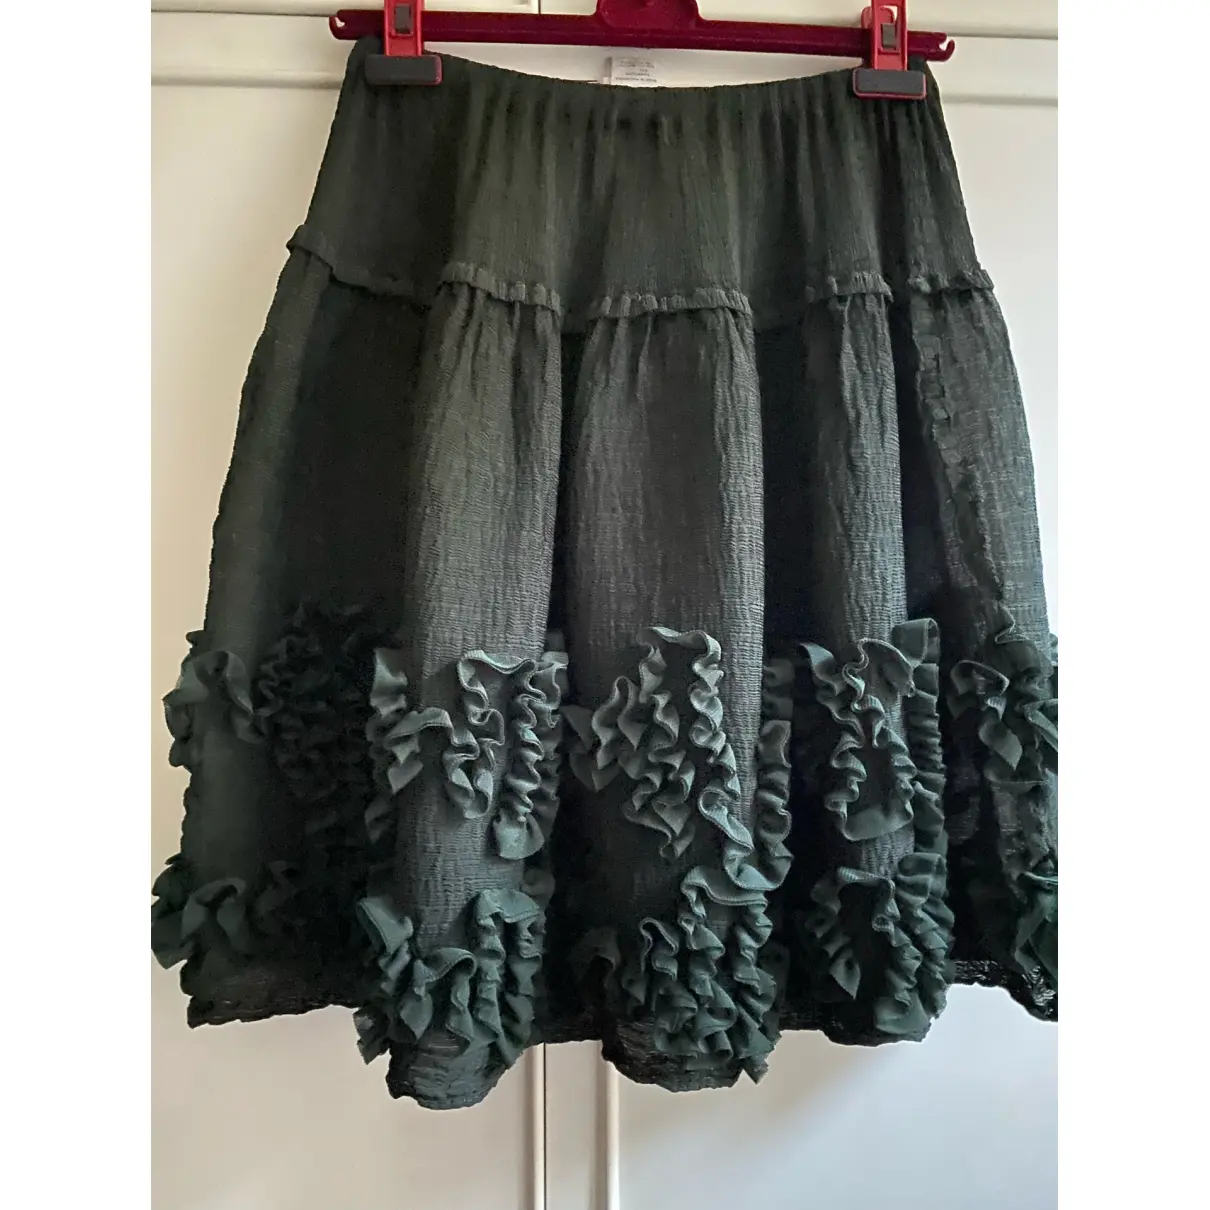 Buy Issey Miyake Skirt online